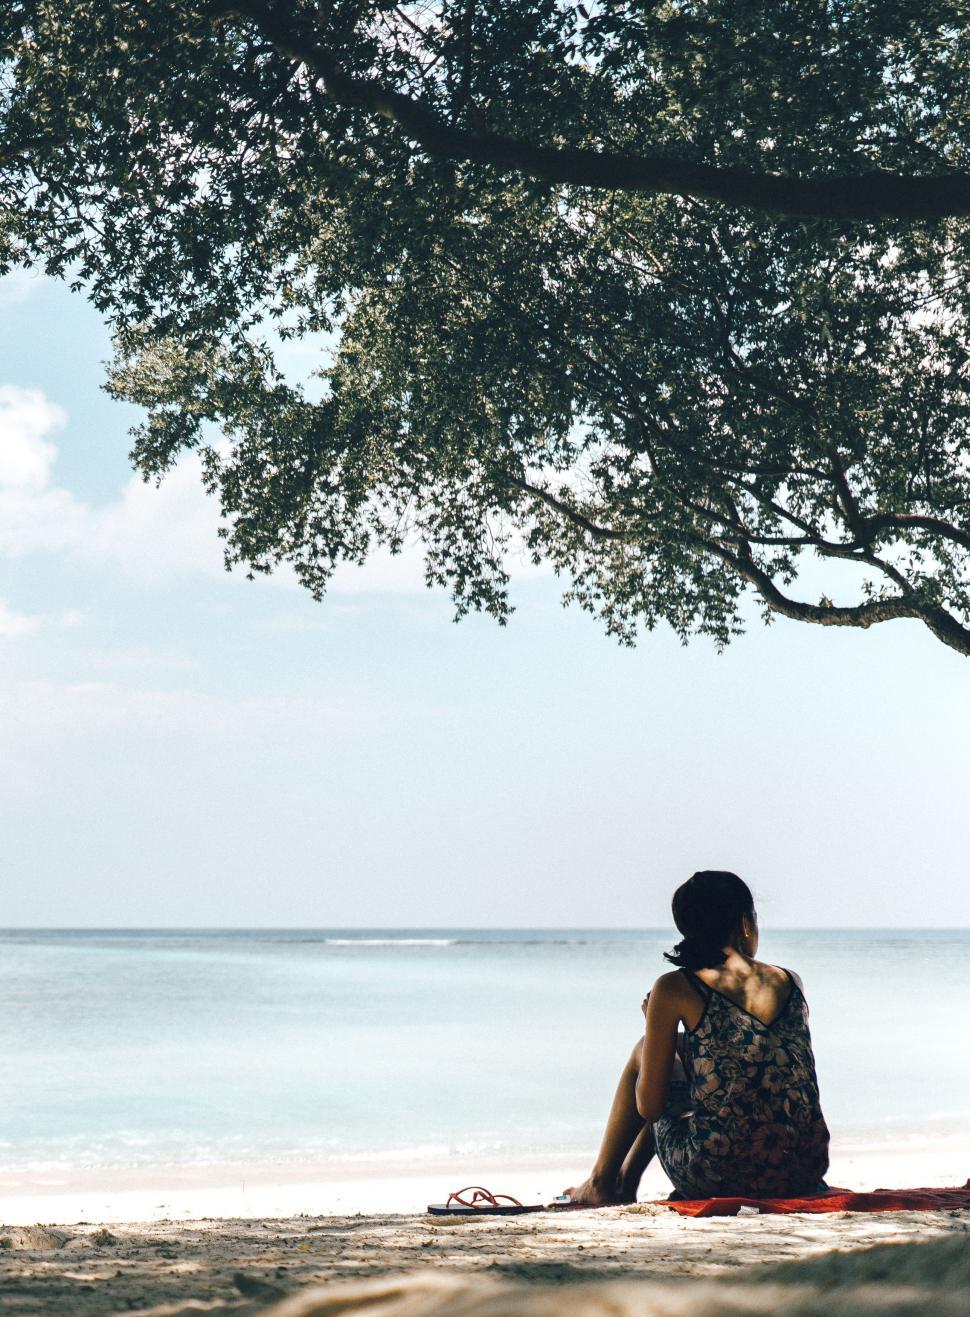 Free Image of Woman Sitting Under Tree on Beach 